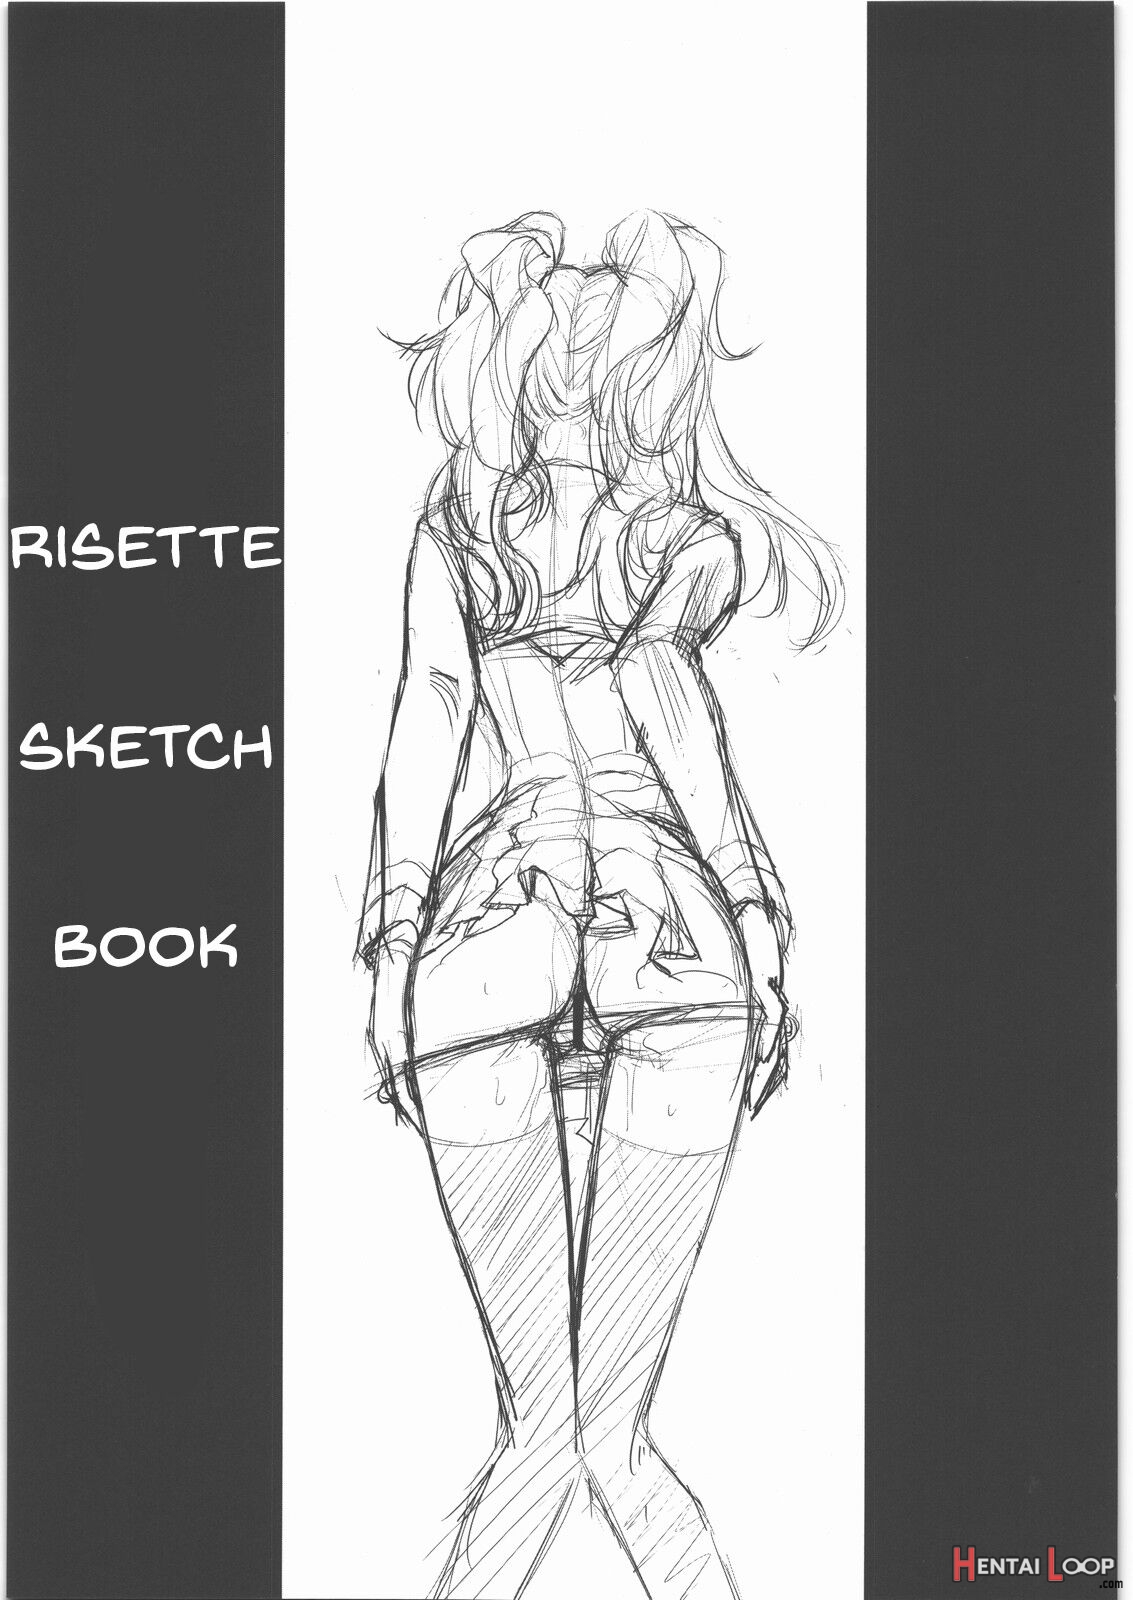 Risette Sketchbook page 2